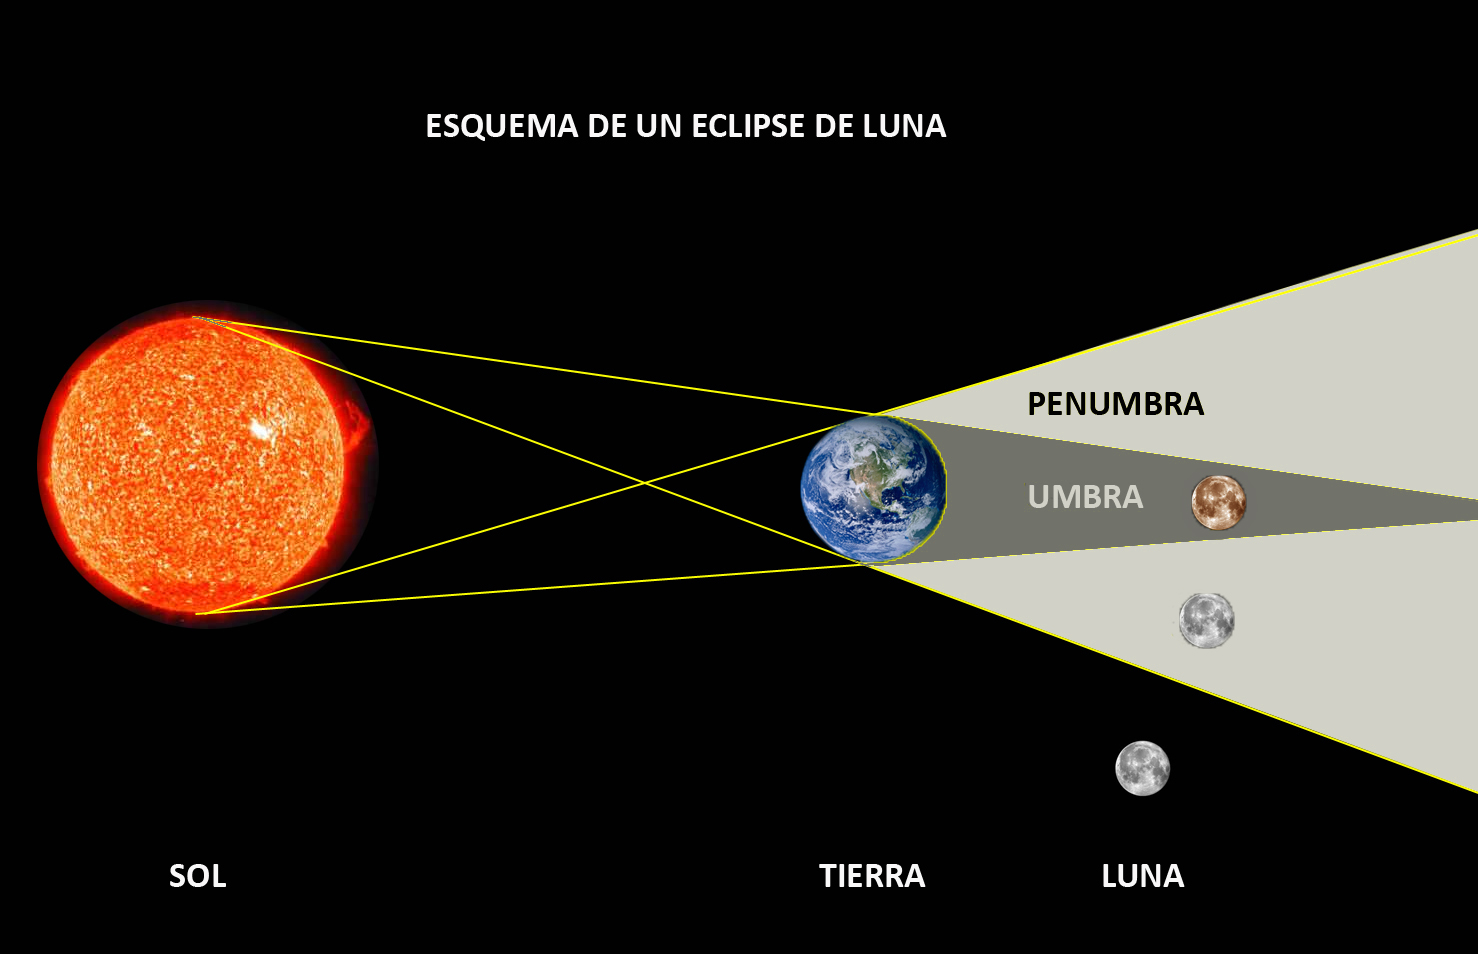 https://periodico.udenar.edu.co/wp-content/uploads/2019/01/Eclipse-Lunar-Esquema.jpg